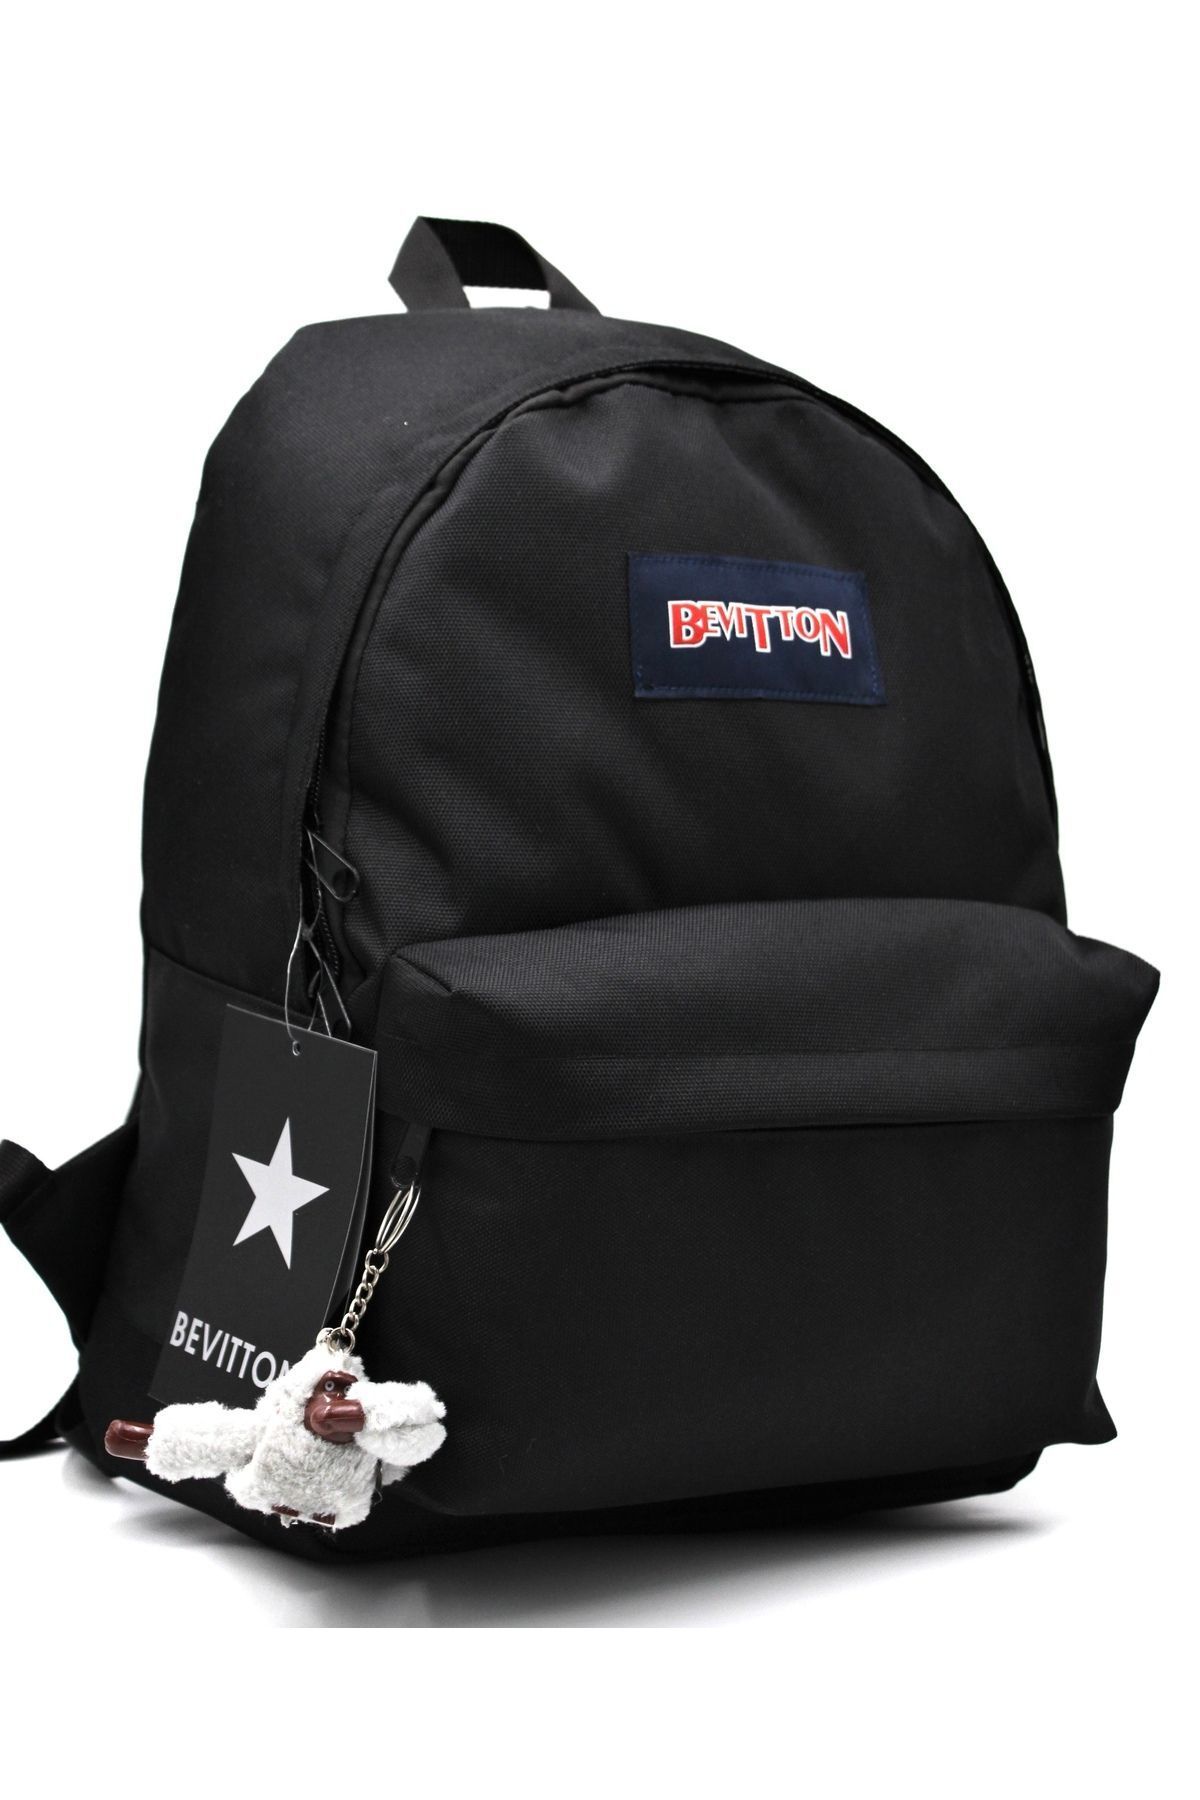 Bevitton Luxury Unisex Black Backpack - Water Resistant, 360 Model